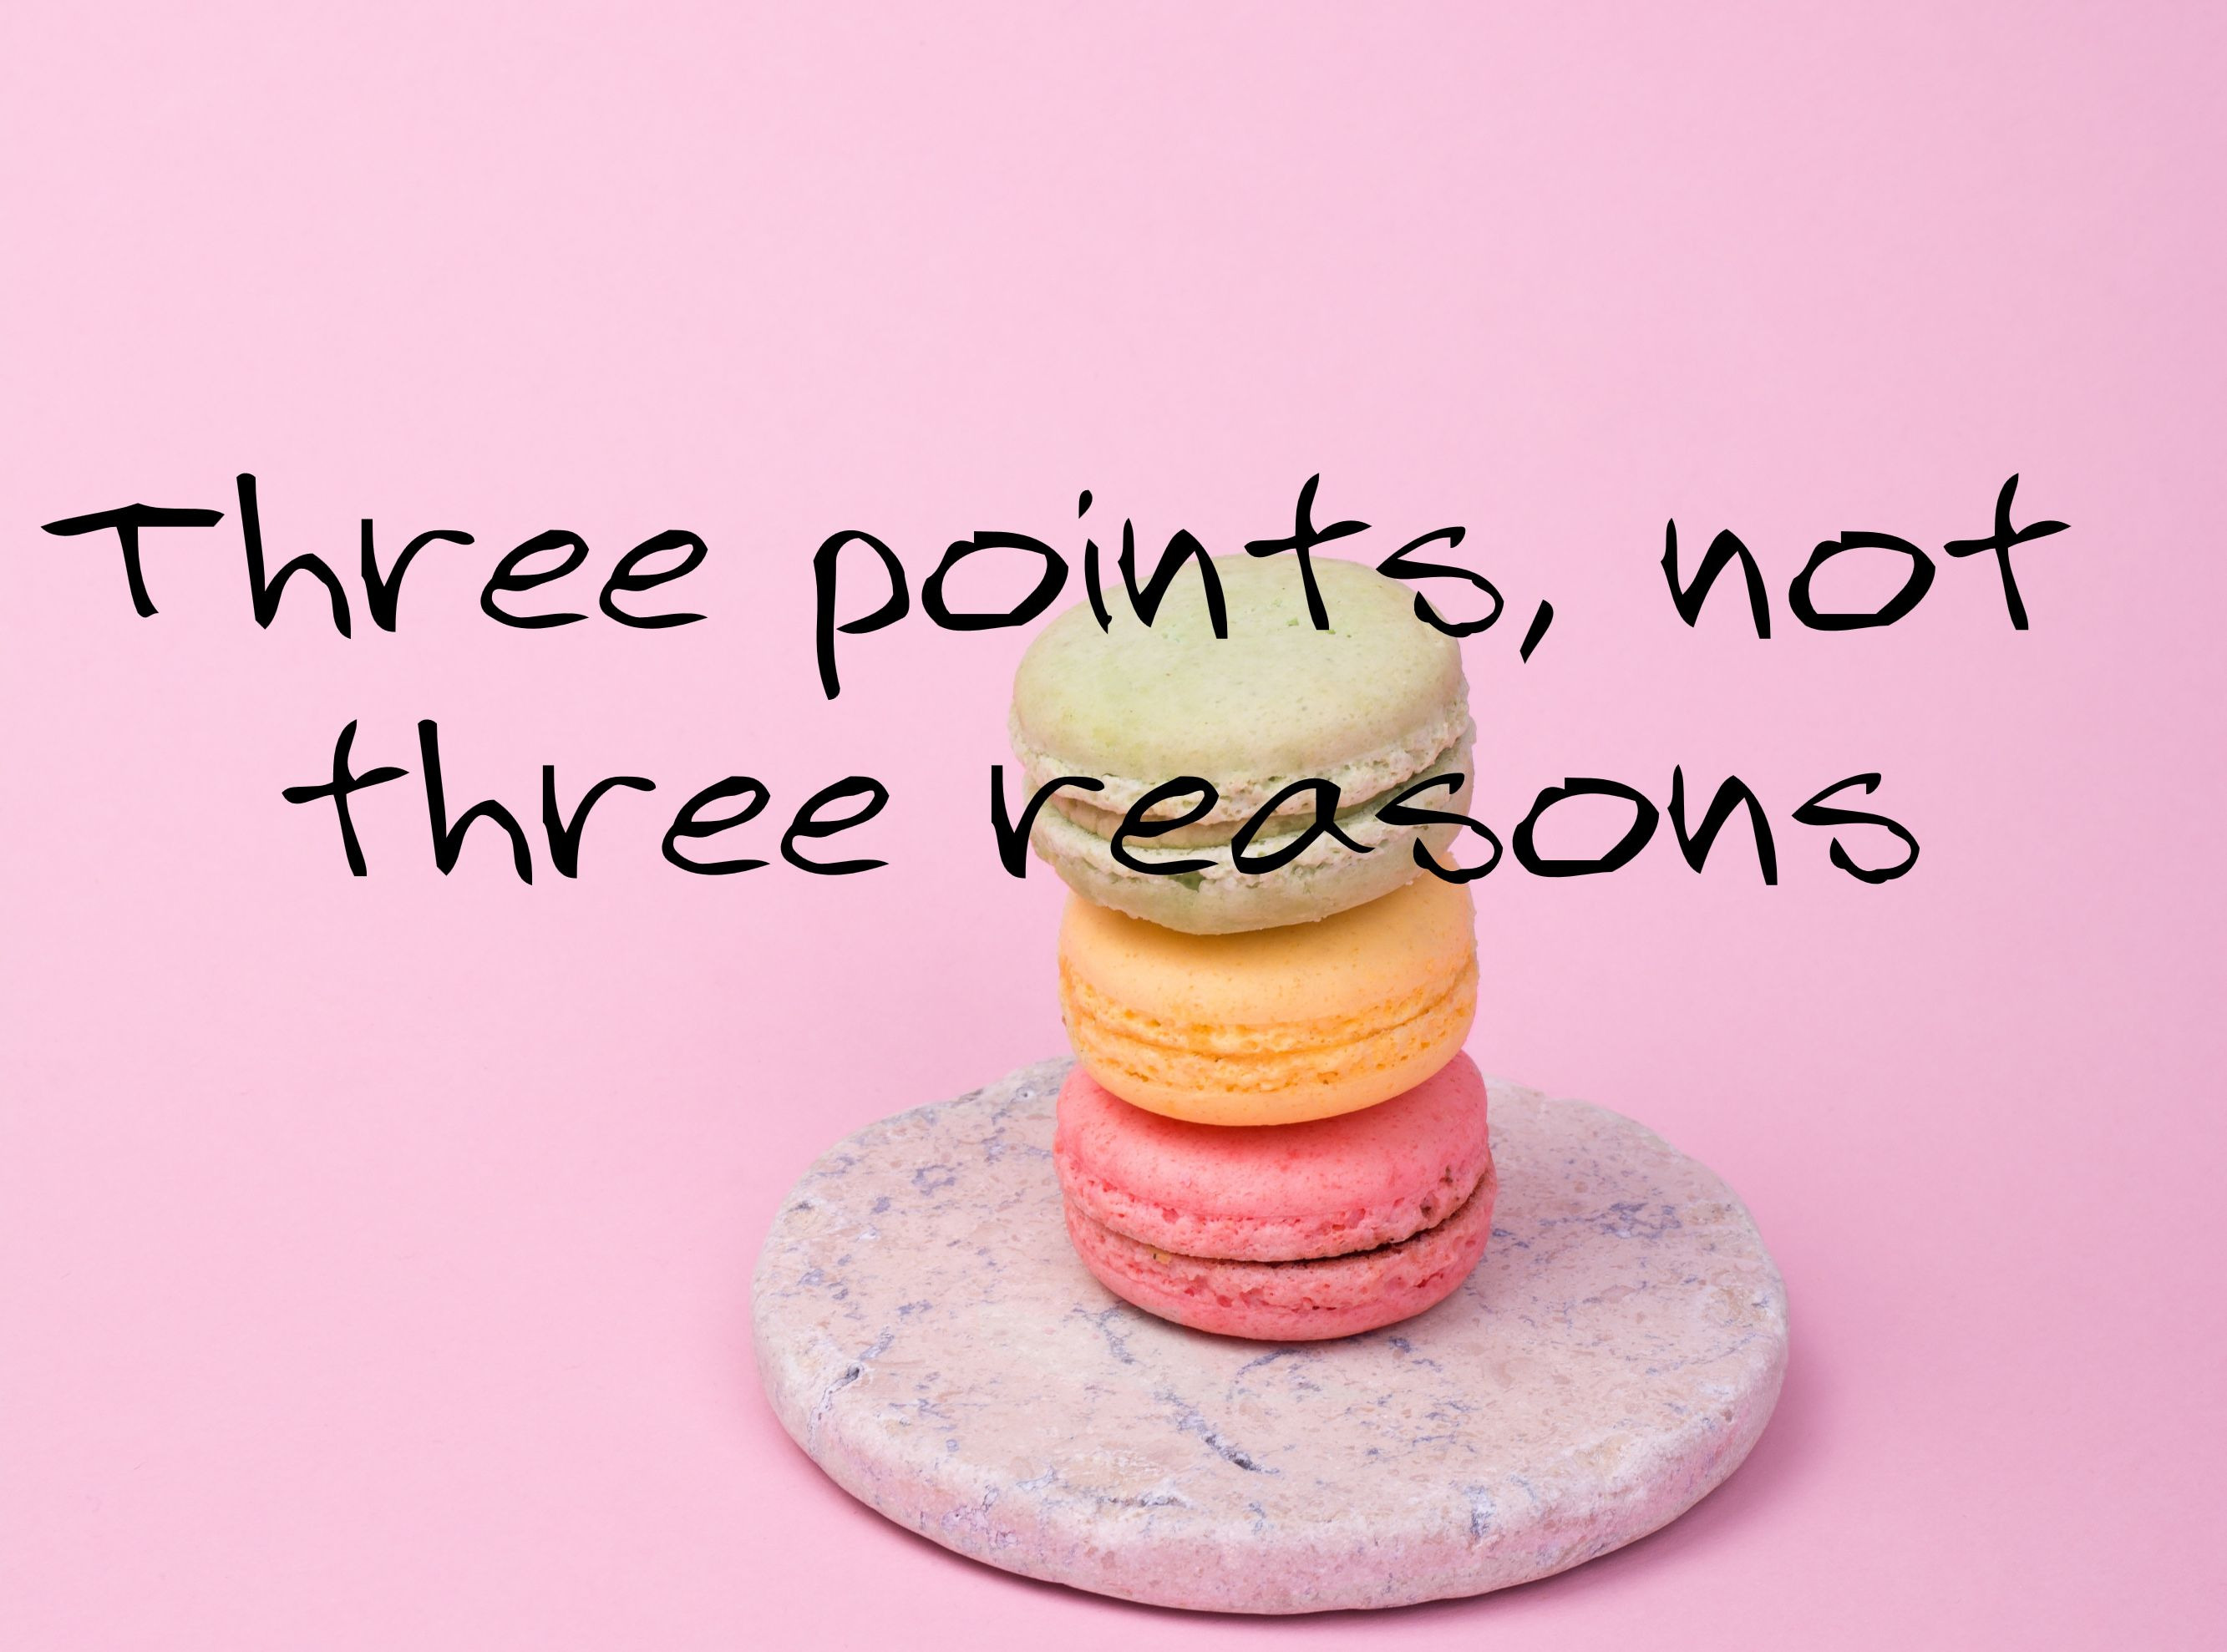 Three points, not three reasons